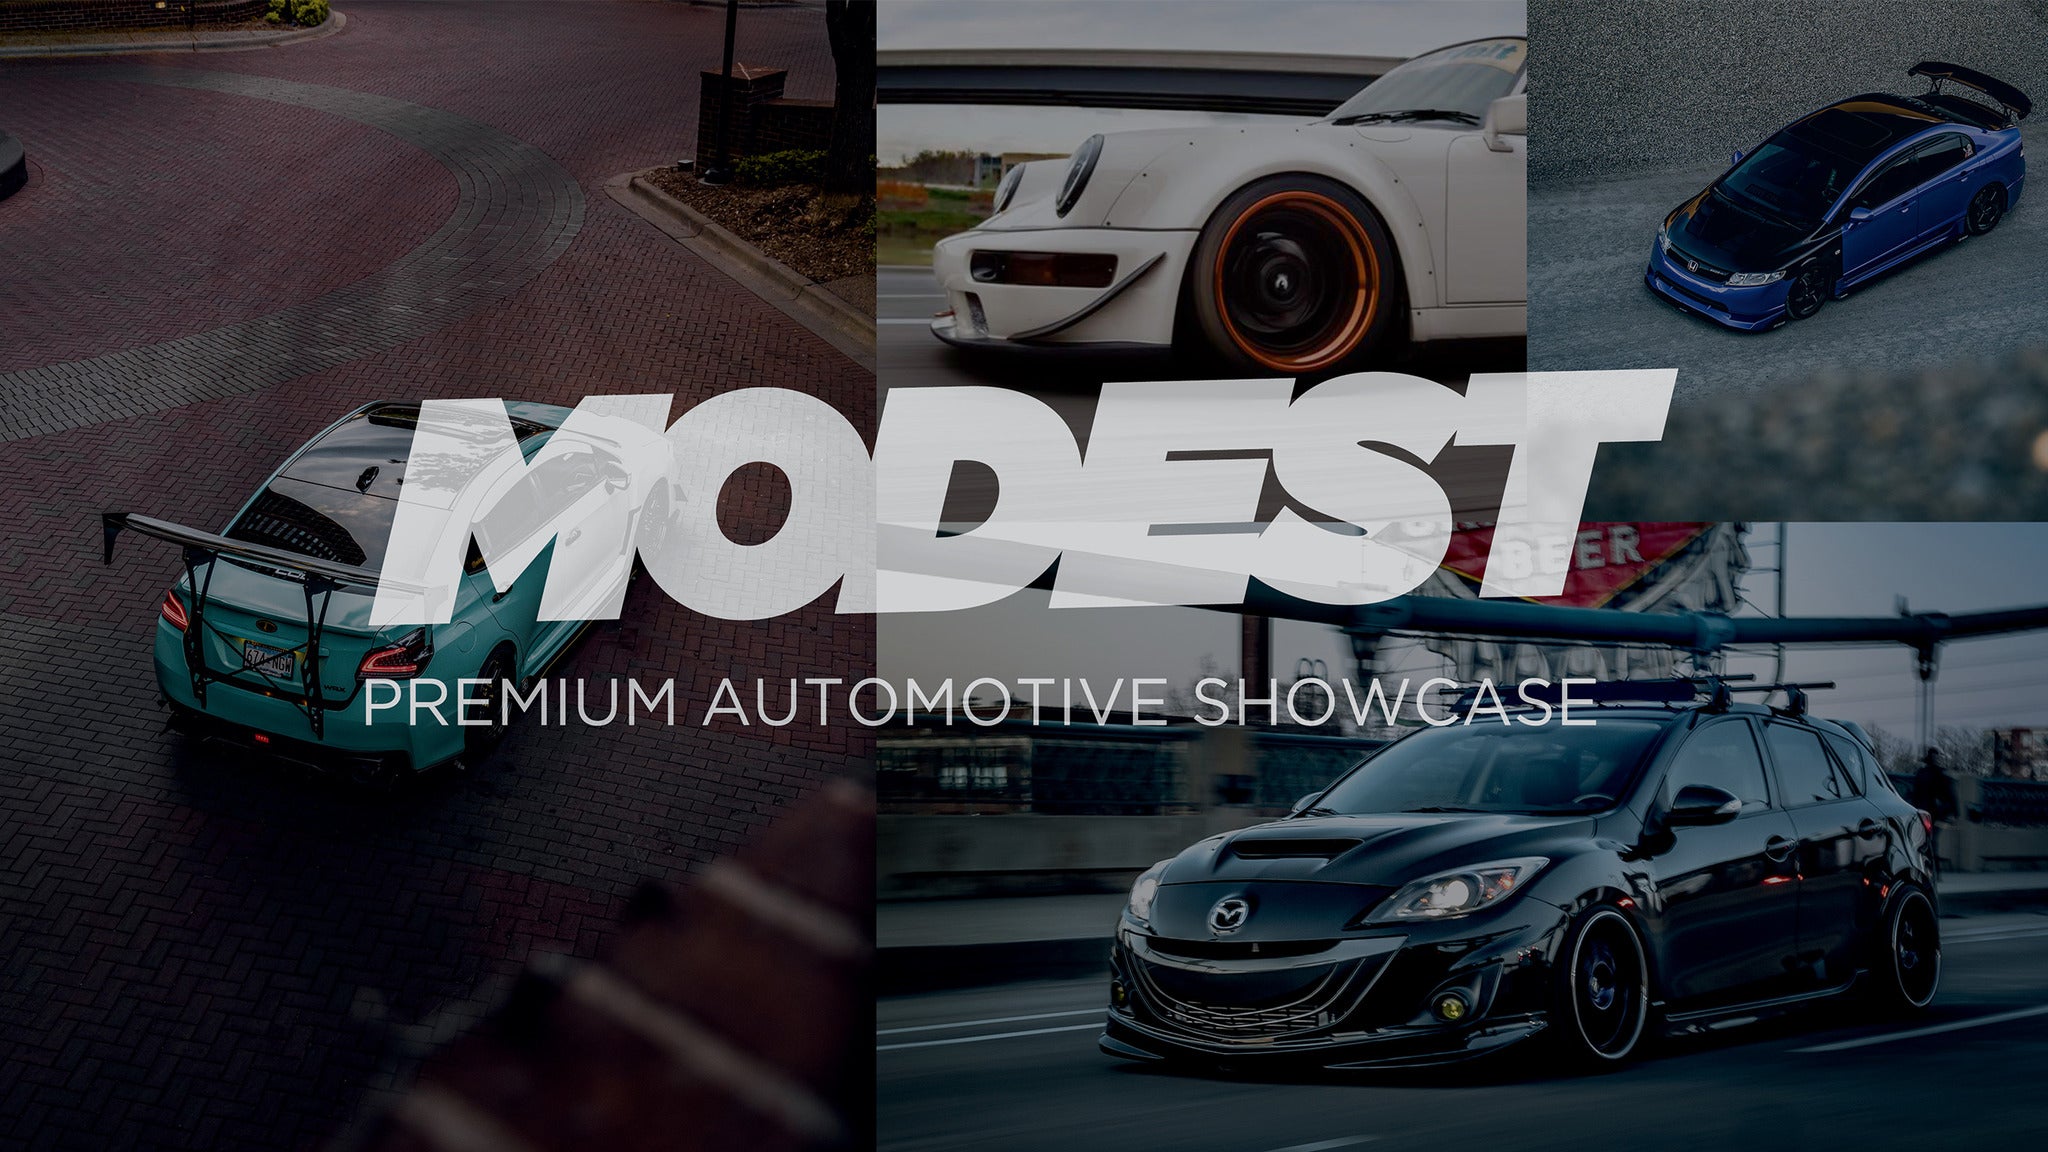 Modest Premium Automotive Showcase presale information on freepresalepasswords.com